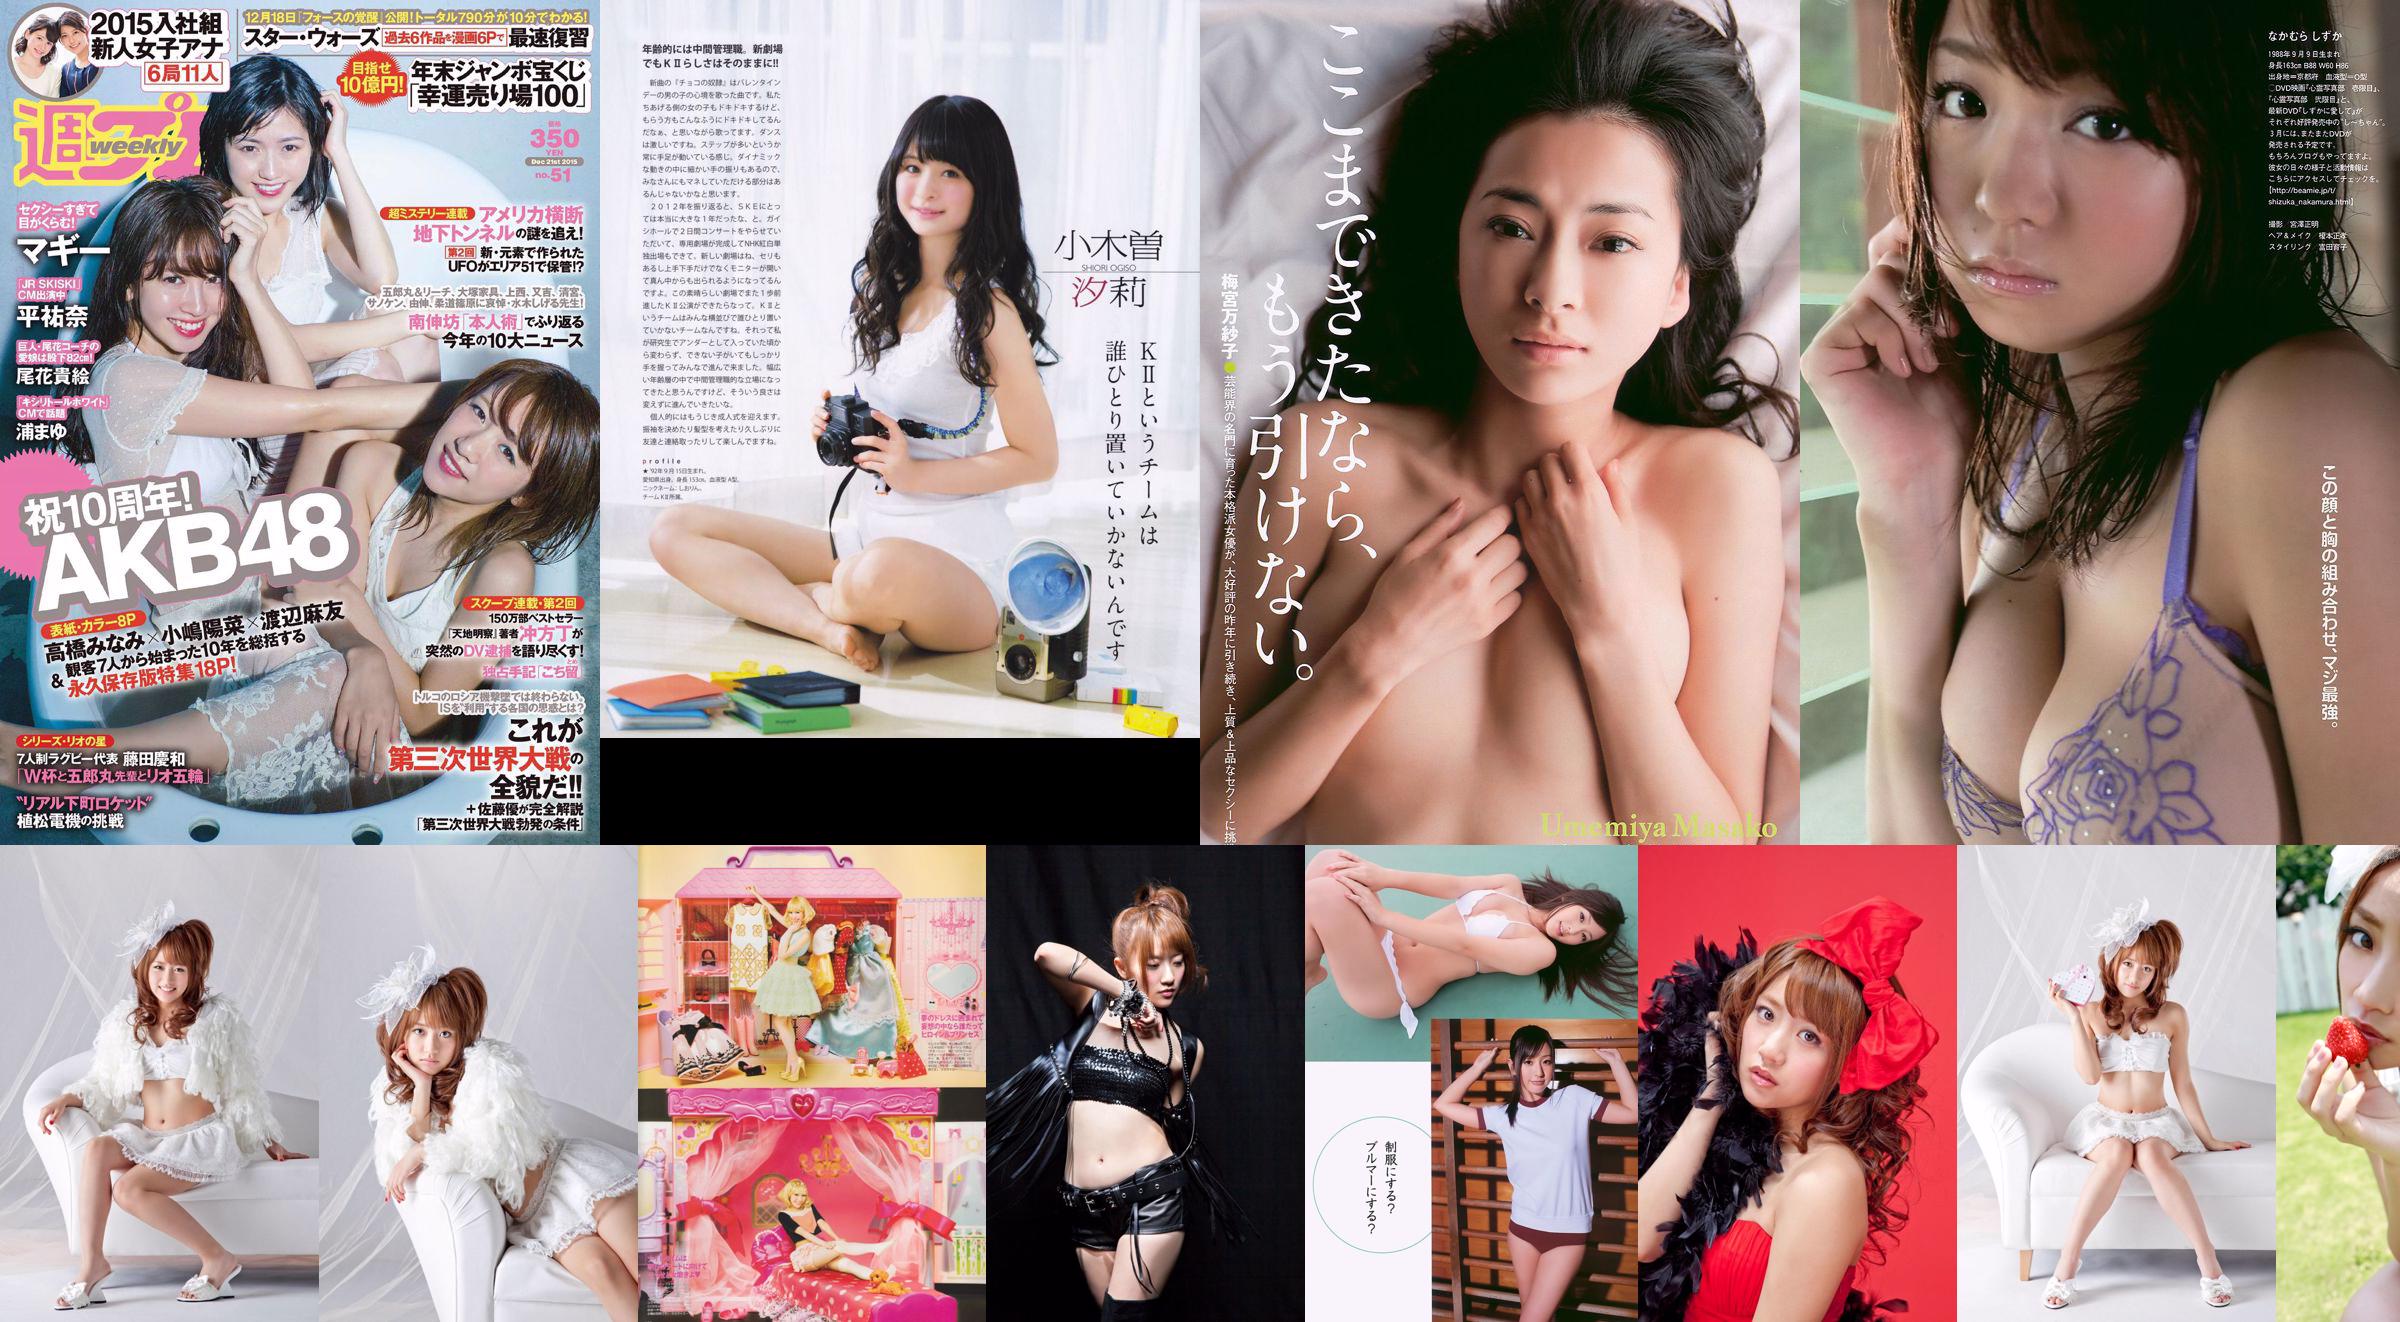 Minami Takahashi Haruna Kojima Mayu Watanabe Maggie Takae Obana Yuna Taira Mayu Ura Mitadera En [Weekly Playboy] 2015 nr 51 Zdjęcie No.ba89ae Strona 1